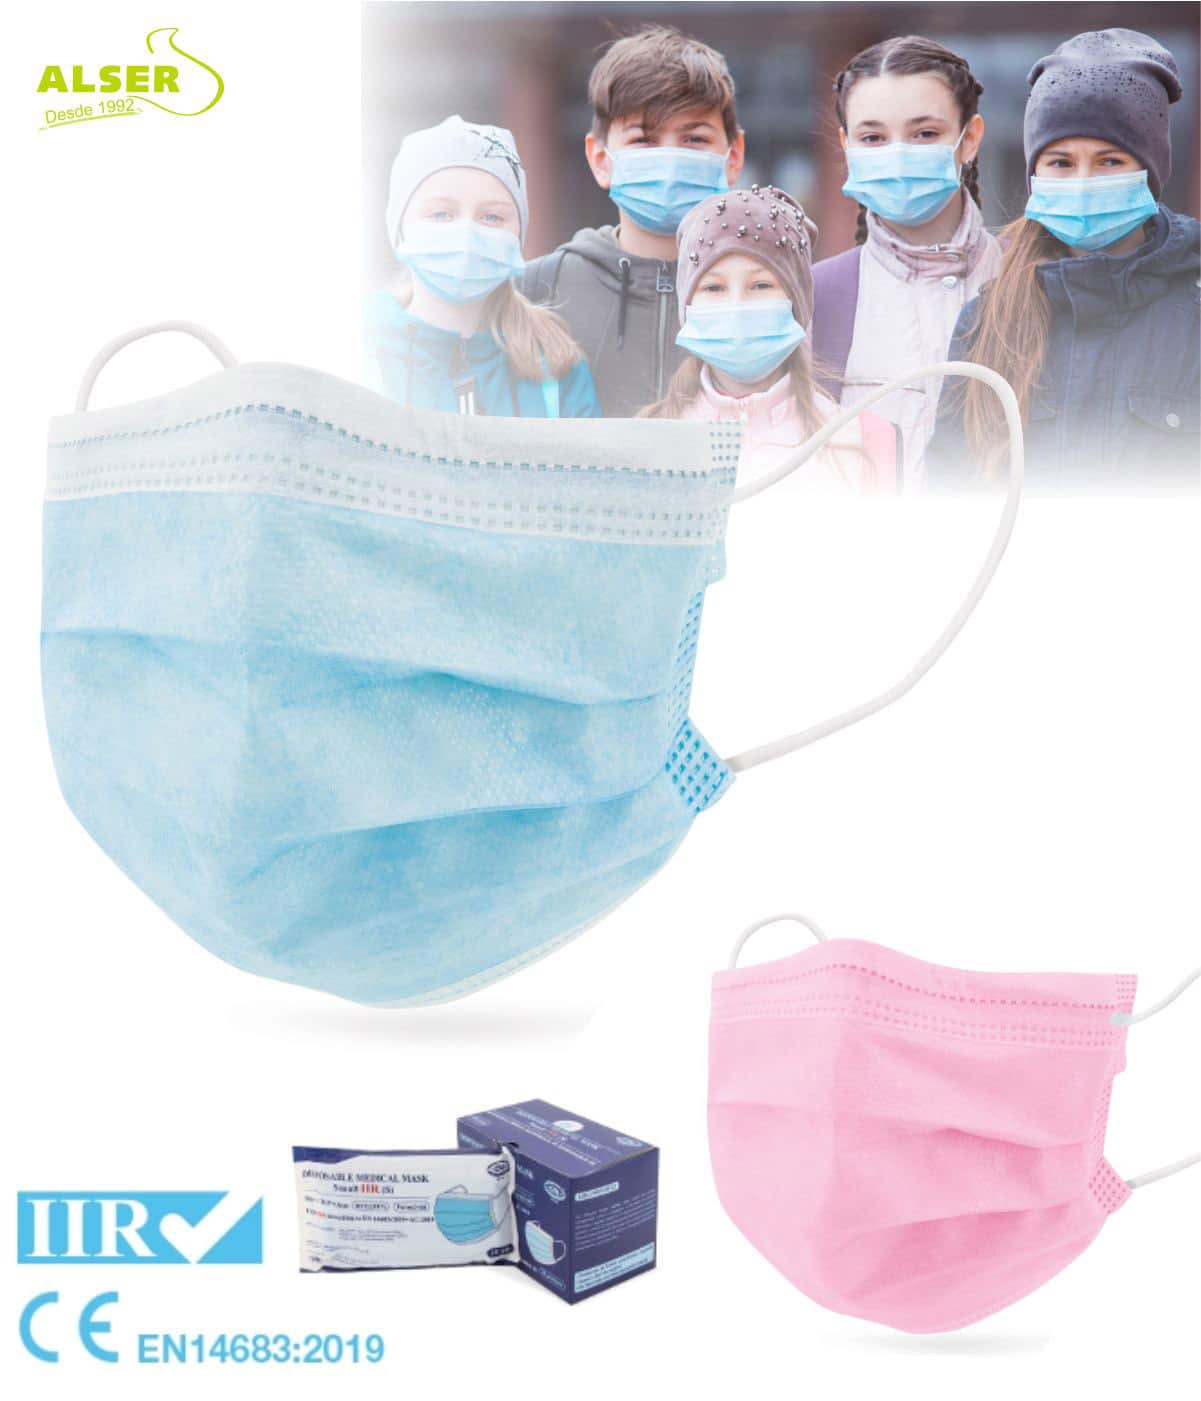 Mascarilla infantil quirúrgica IIR